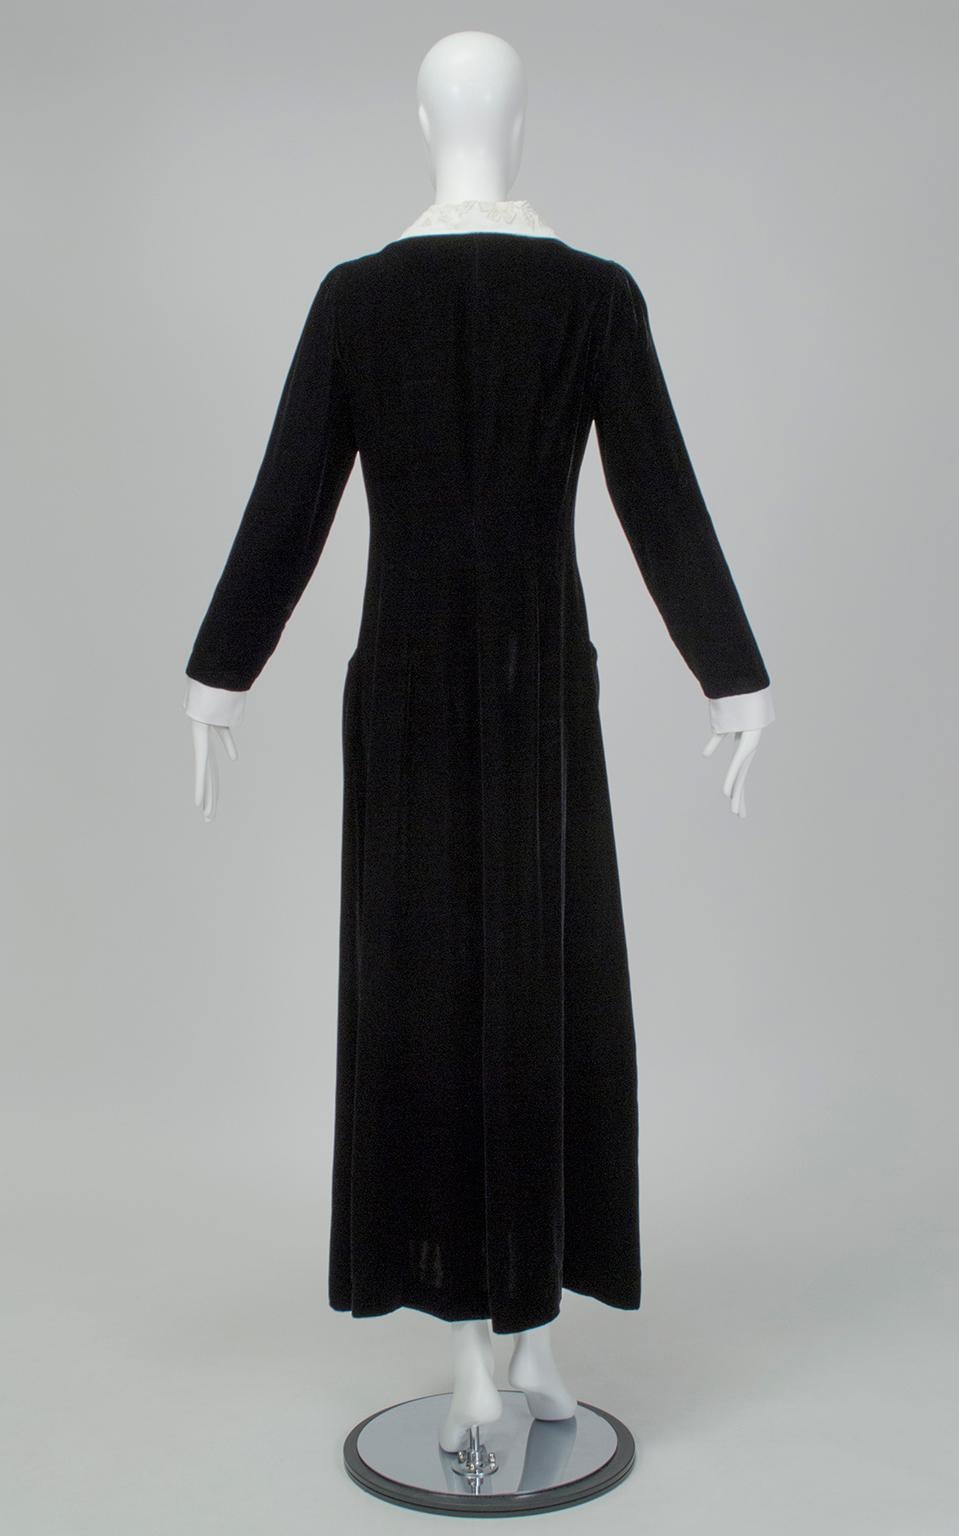 vintage black dress with white collar